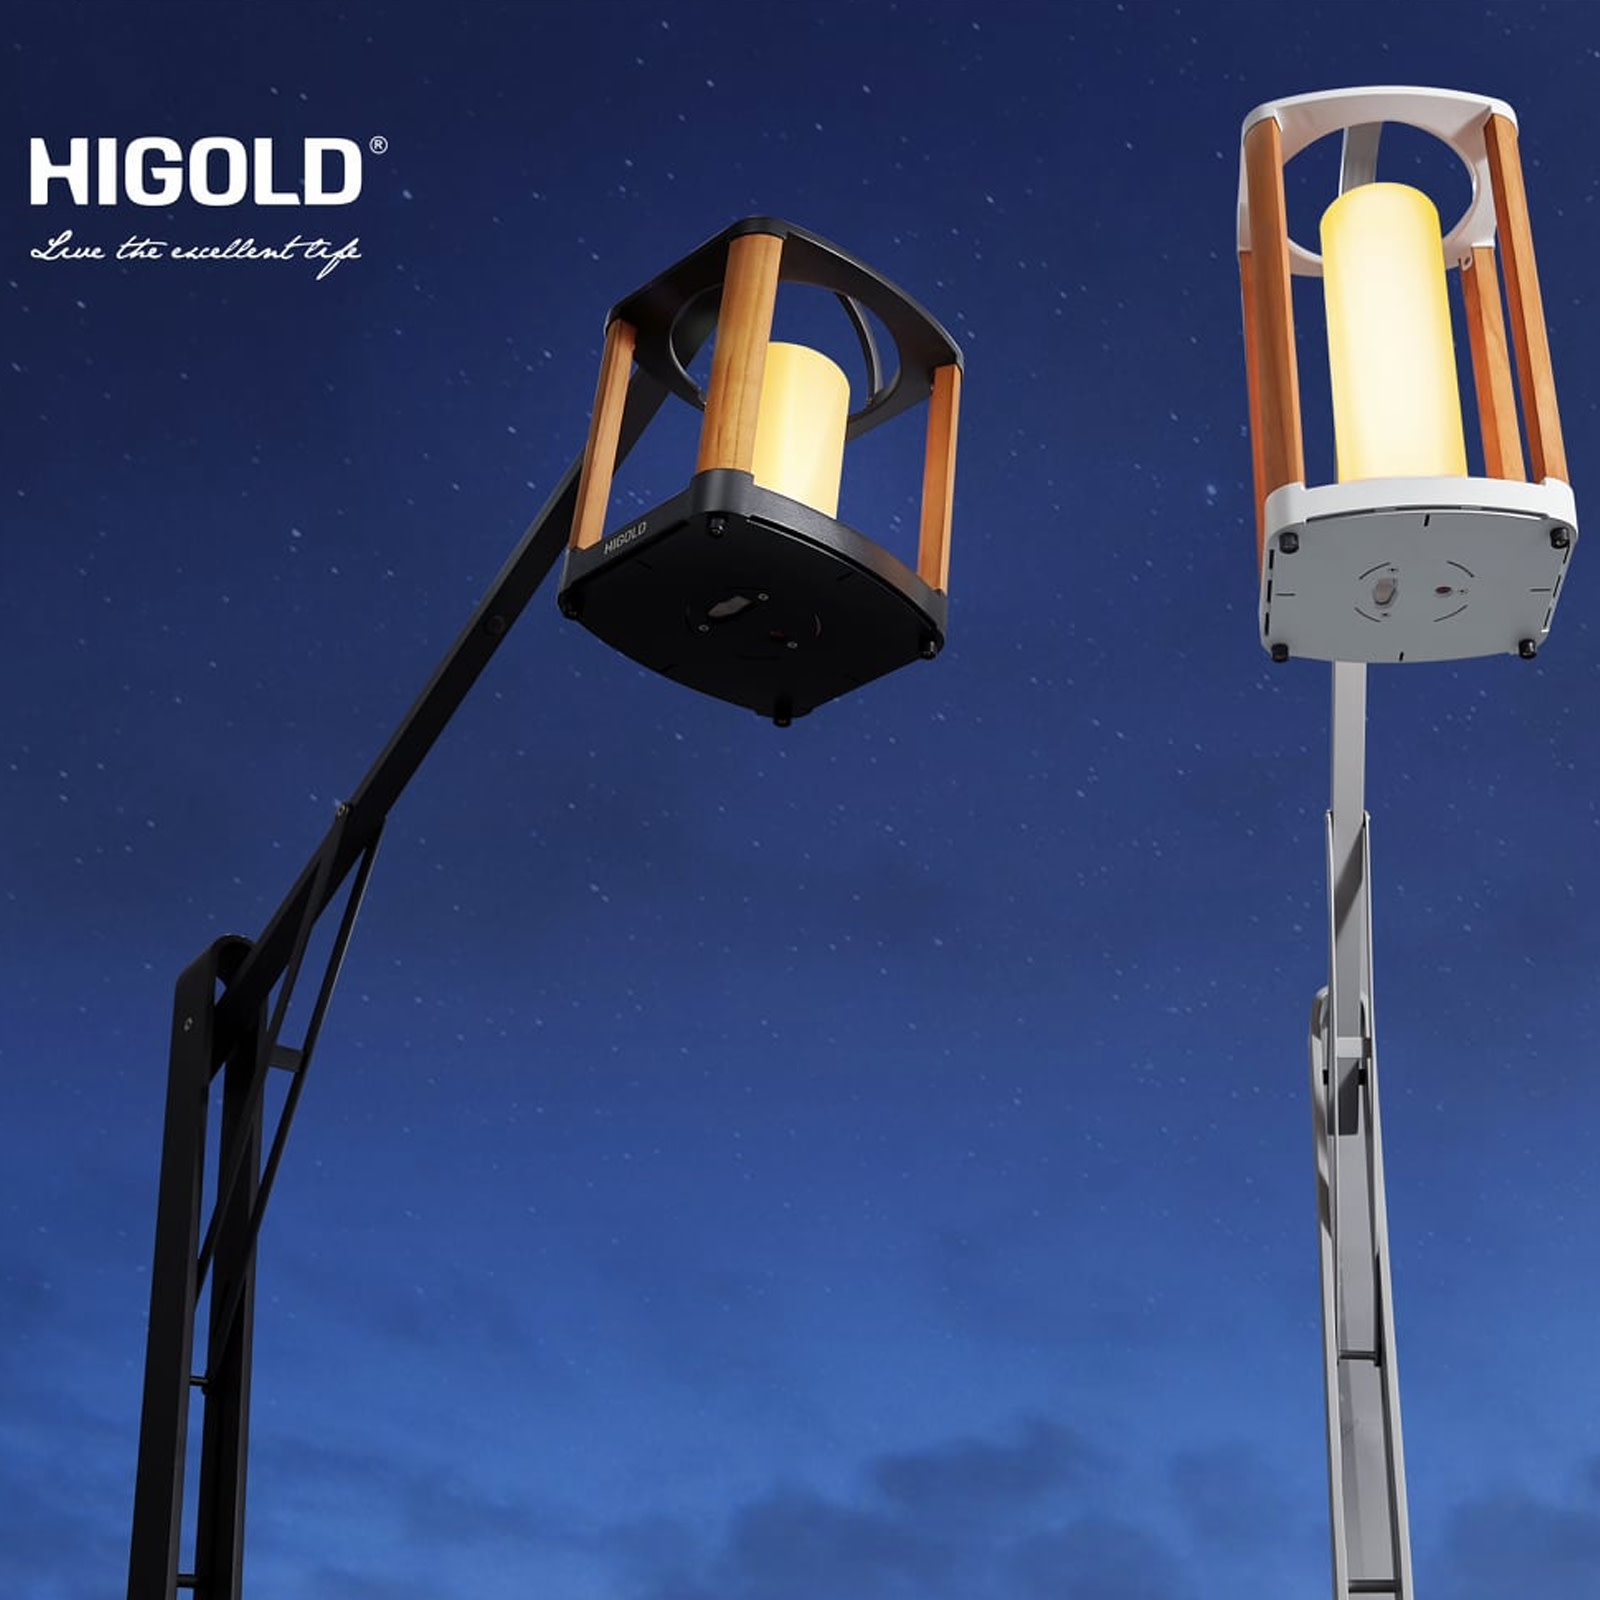 Higold Higold Aurora outdoor led light solar small charcoal frame